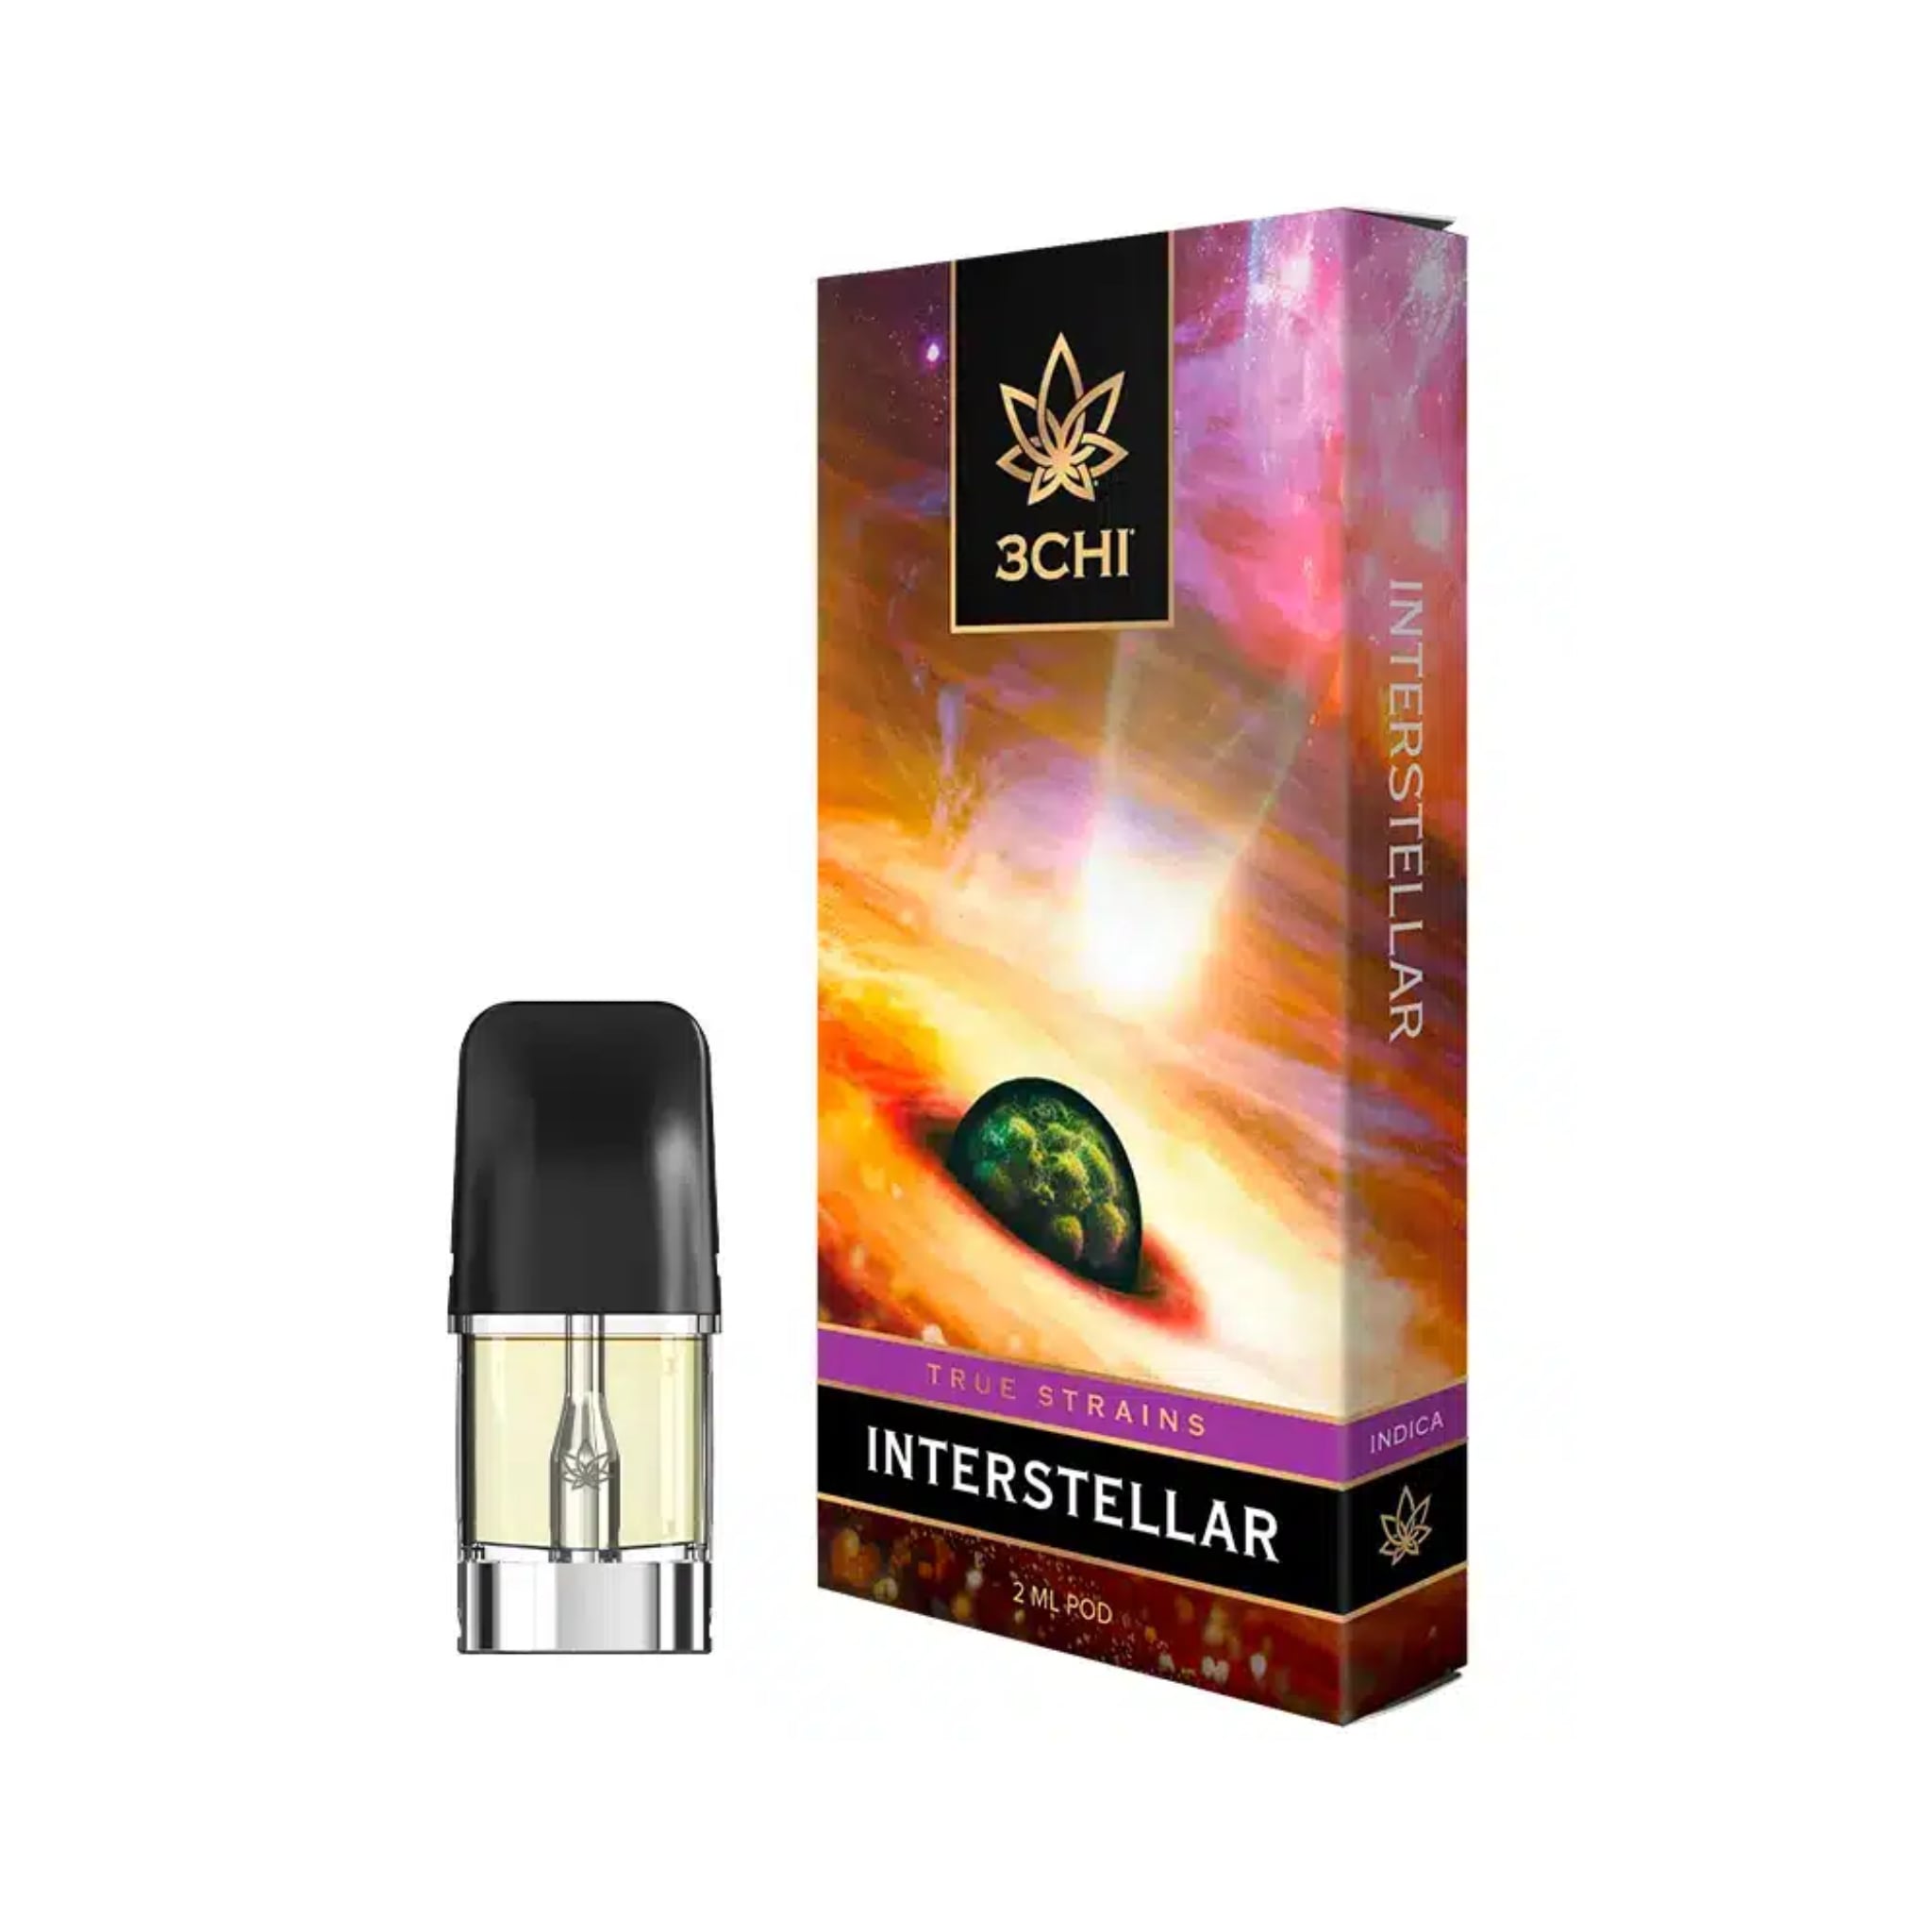 3Chi Interstellar 2g Indica - Battery and Cart True Strains Interstellar